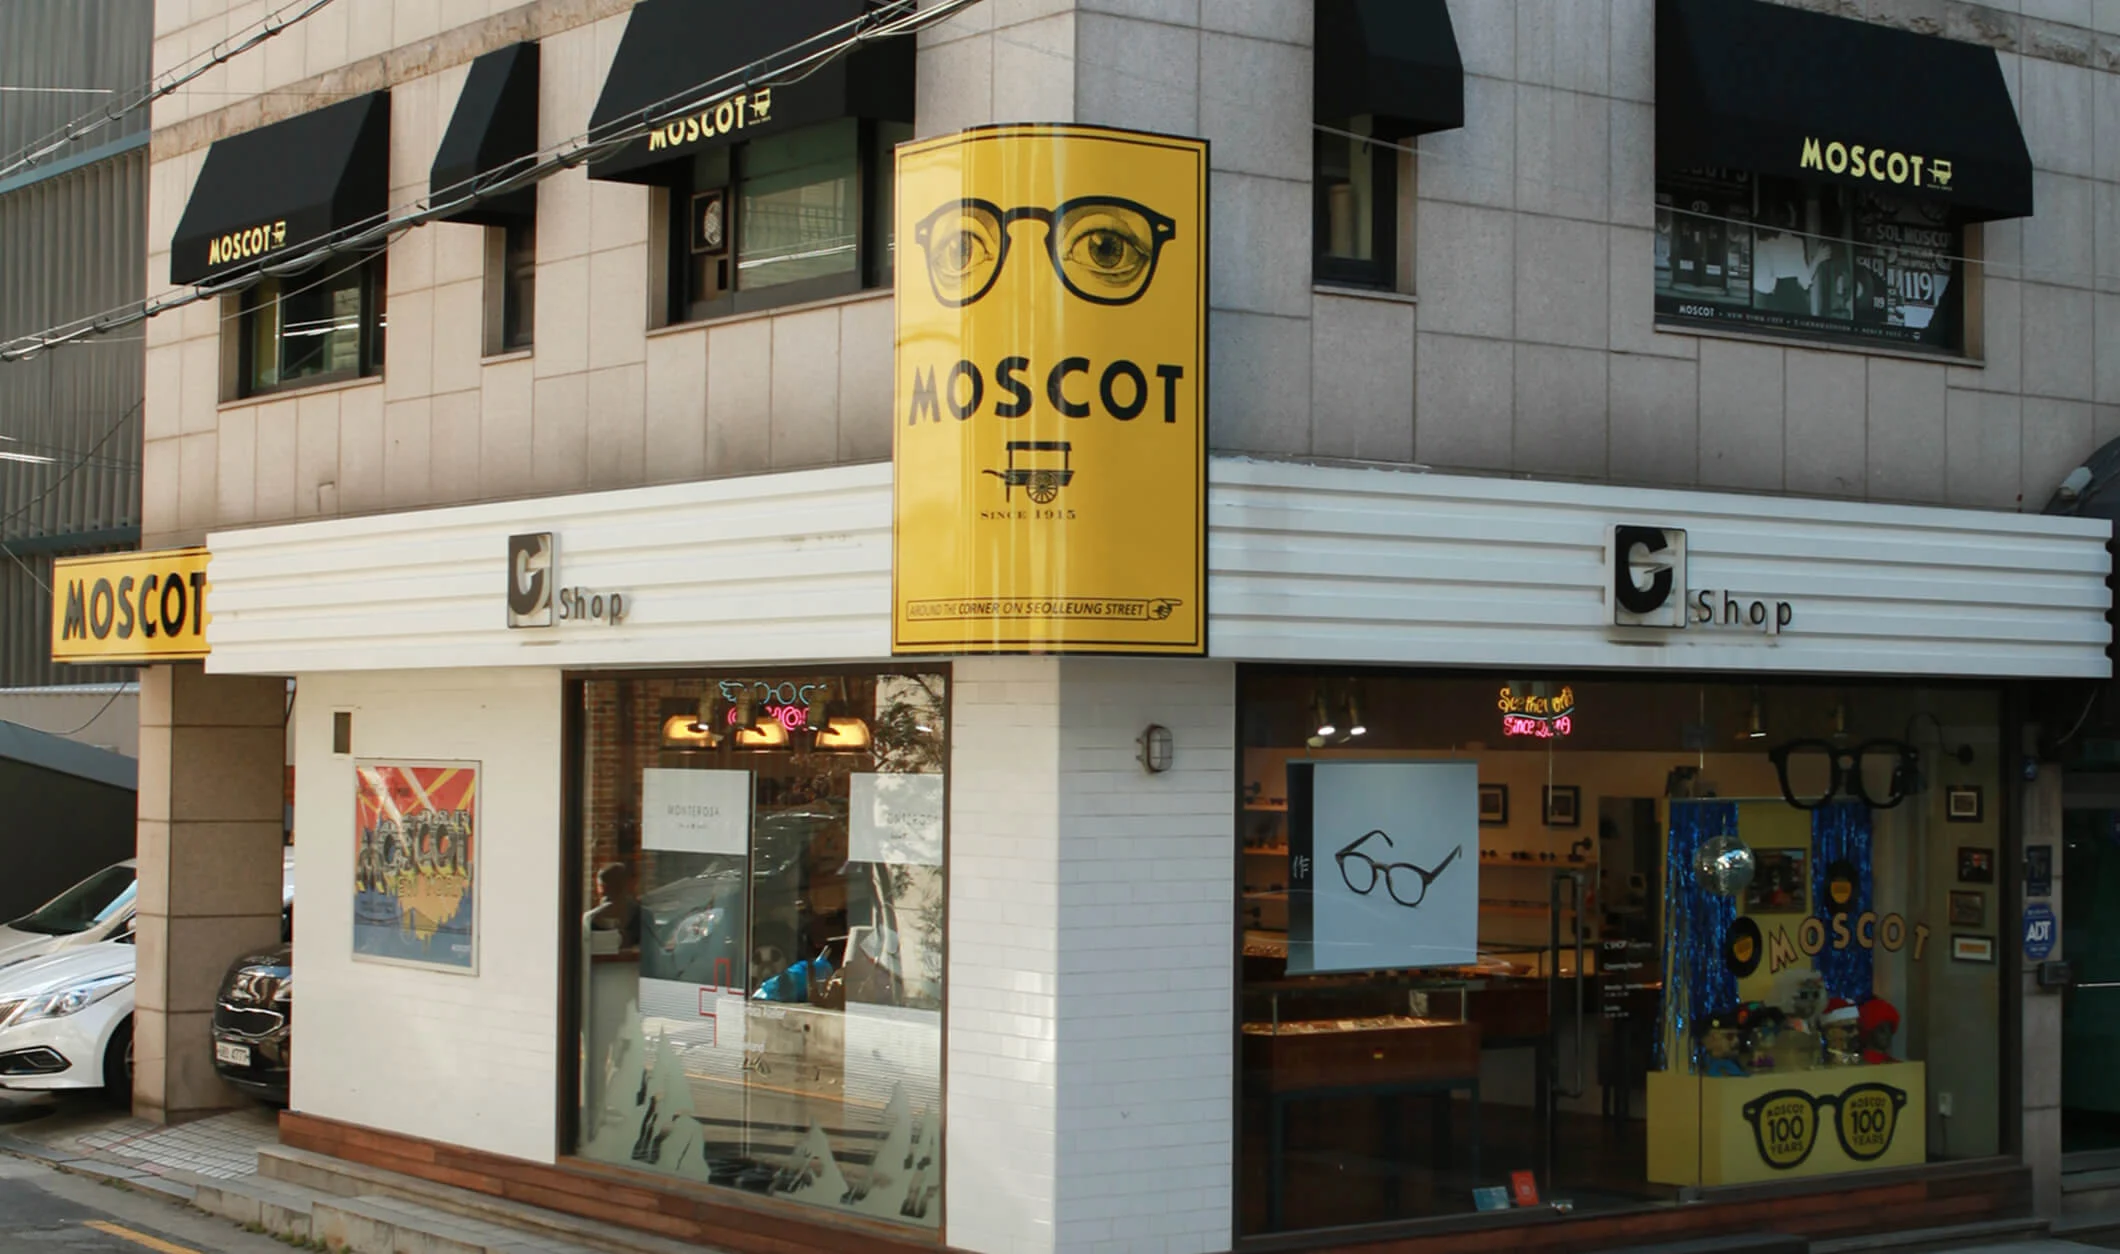 The MOSCOT Seoul Shop exterior